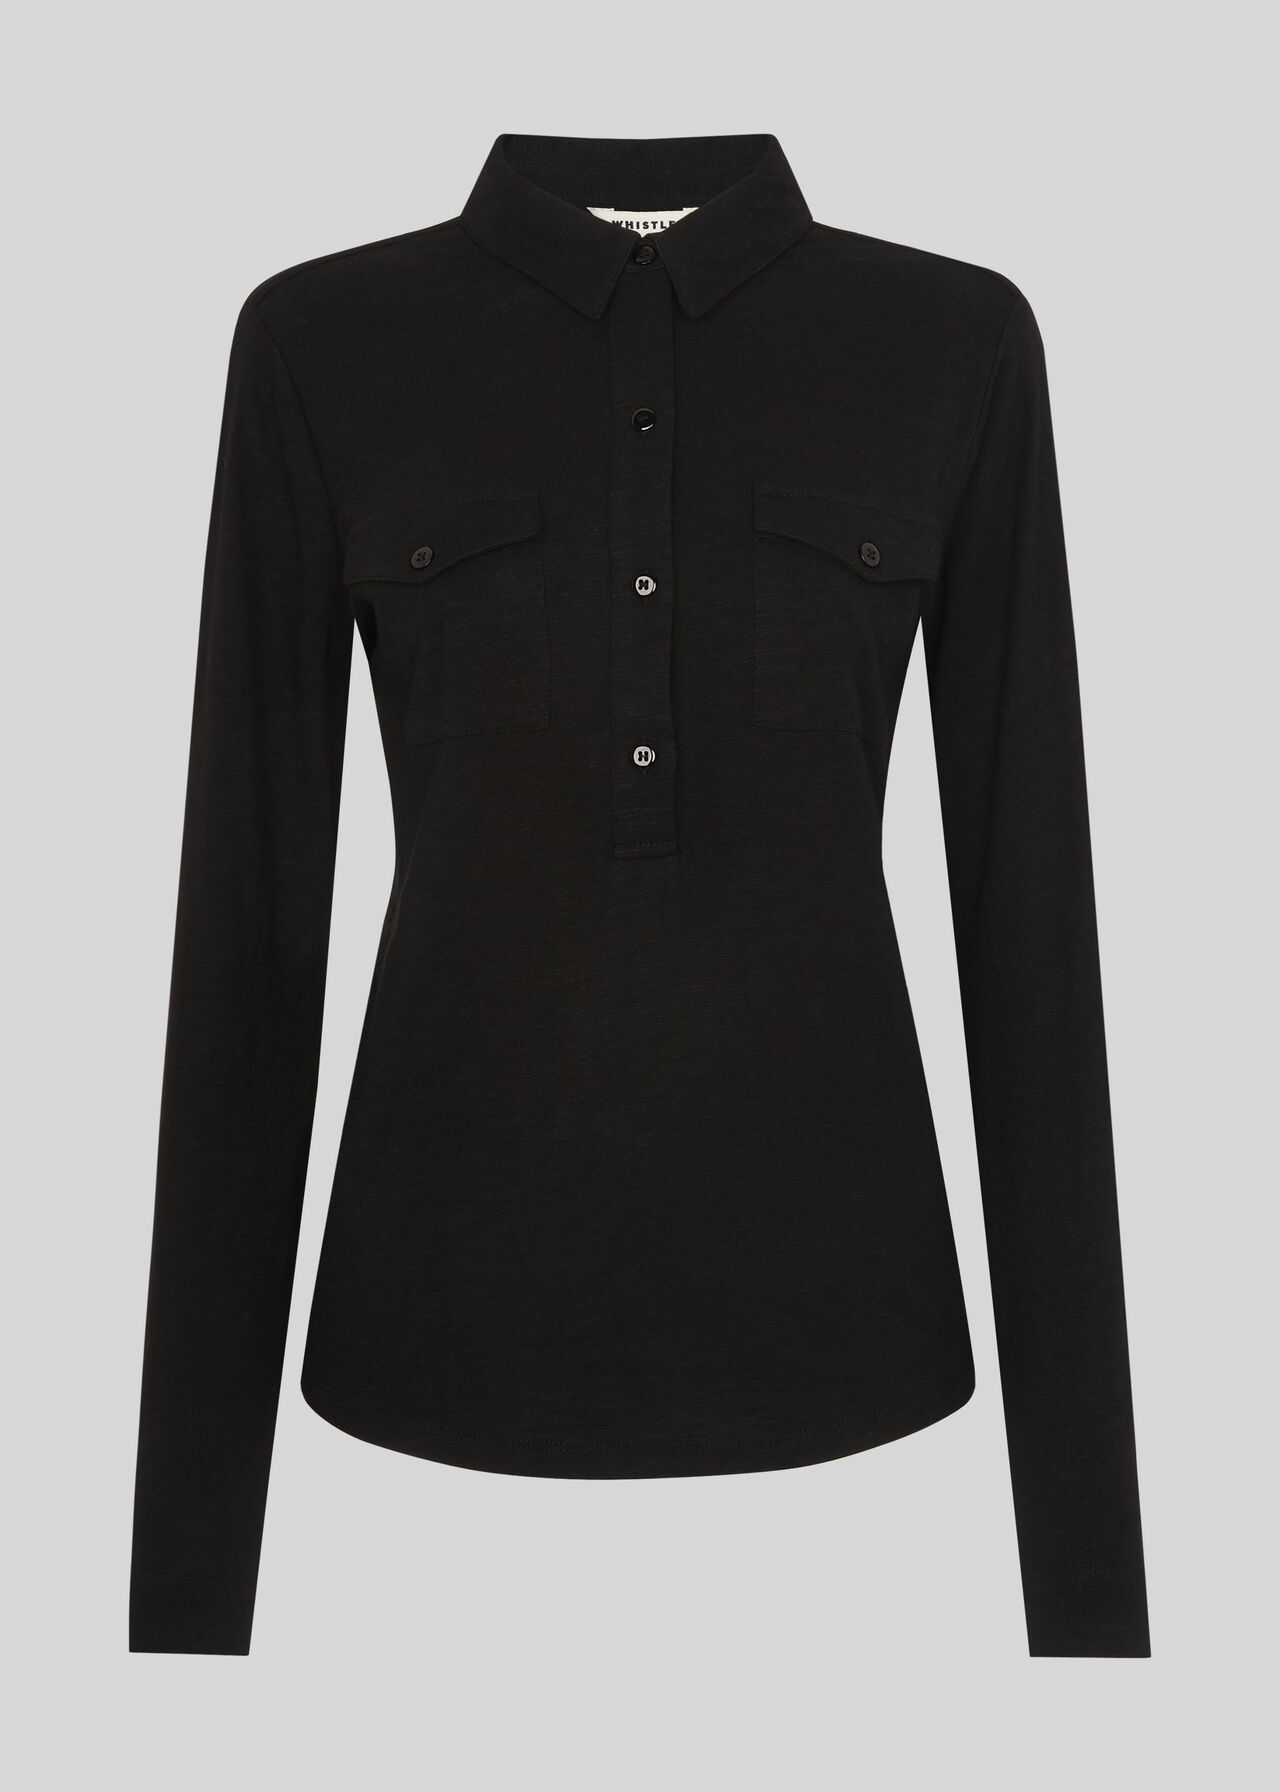 Black Jersey Cotton Pocket Shirt | WHISTLES | Whistles